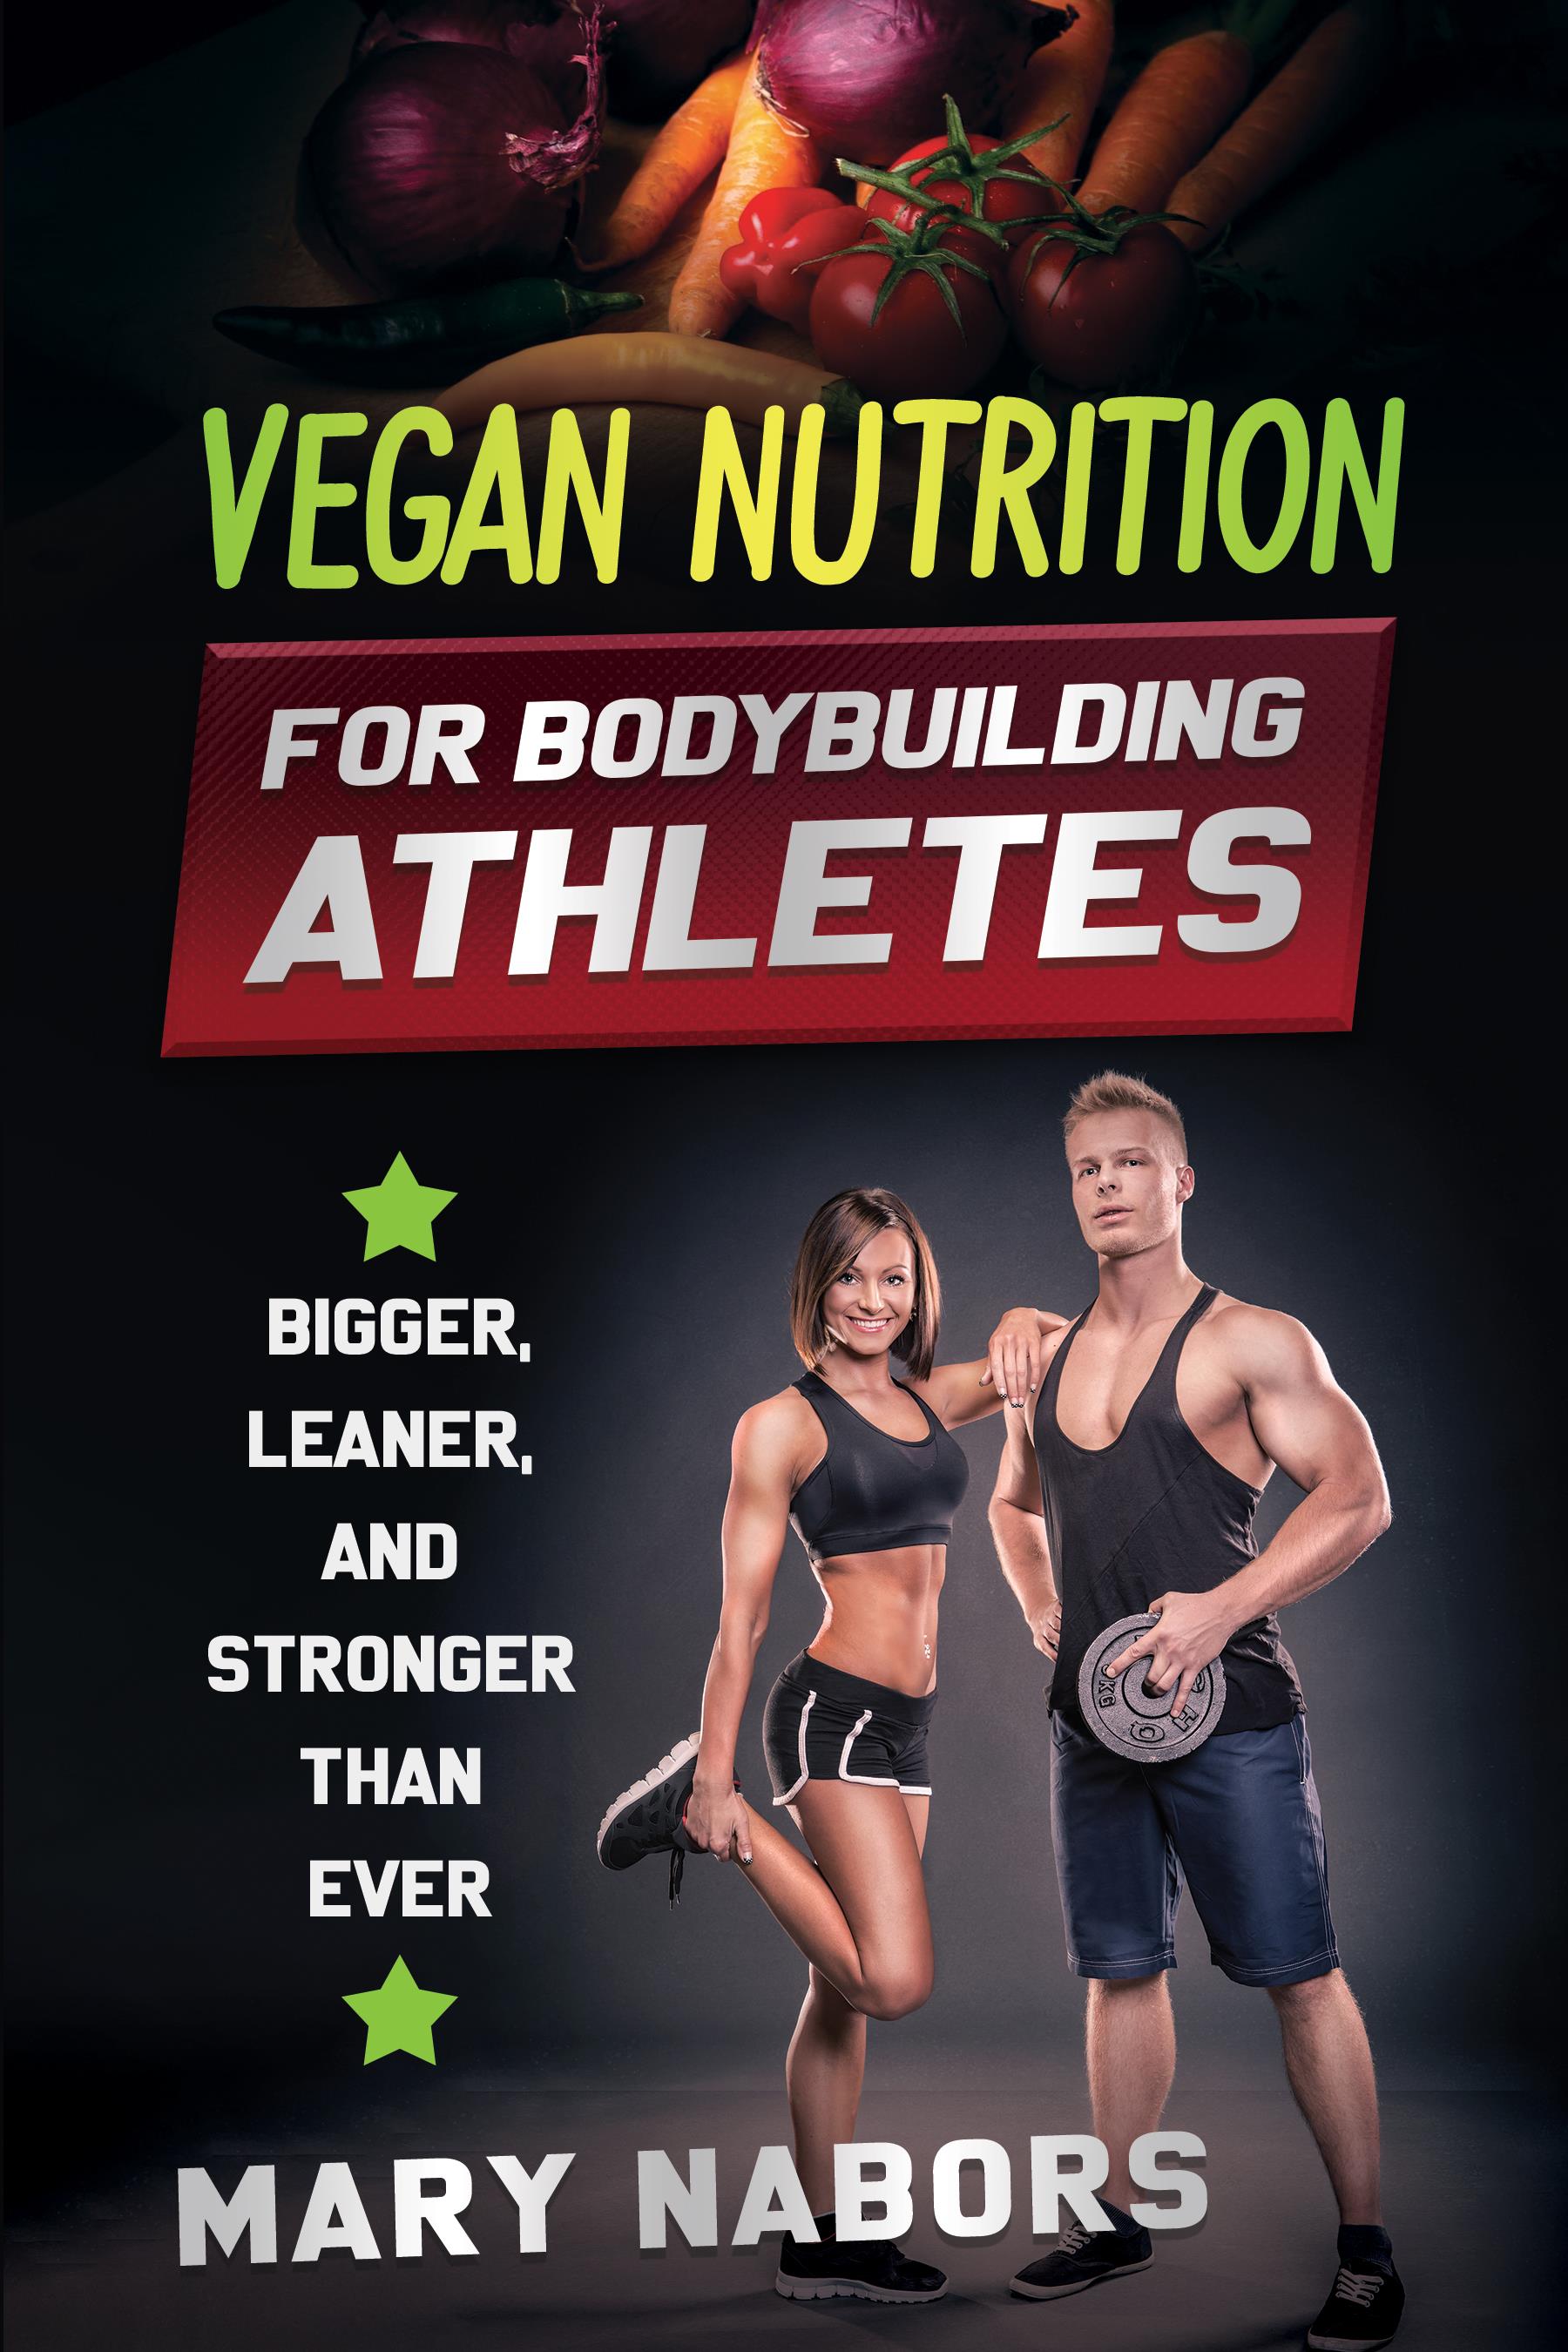 Vegan nutrition for bodybuilding athletes